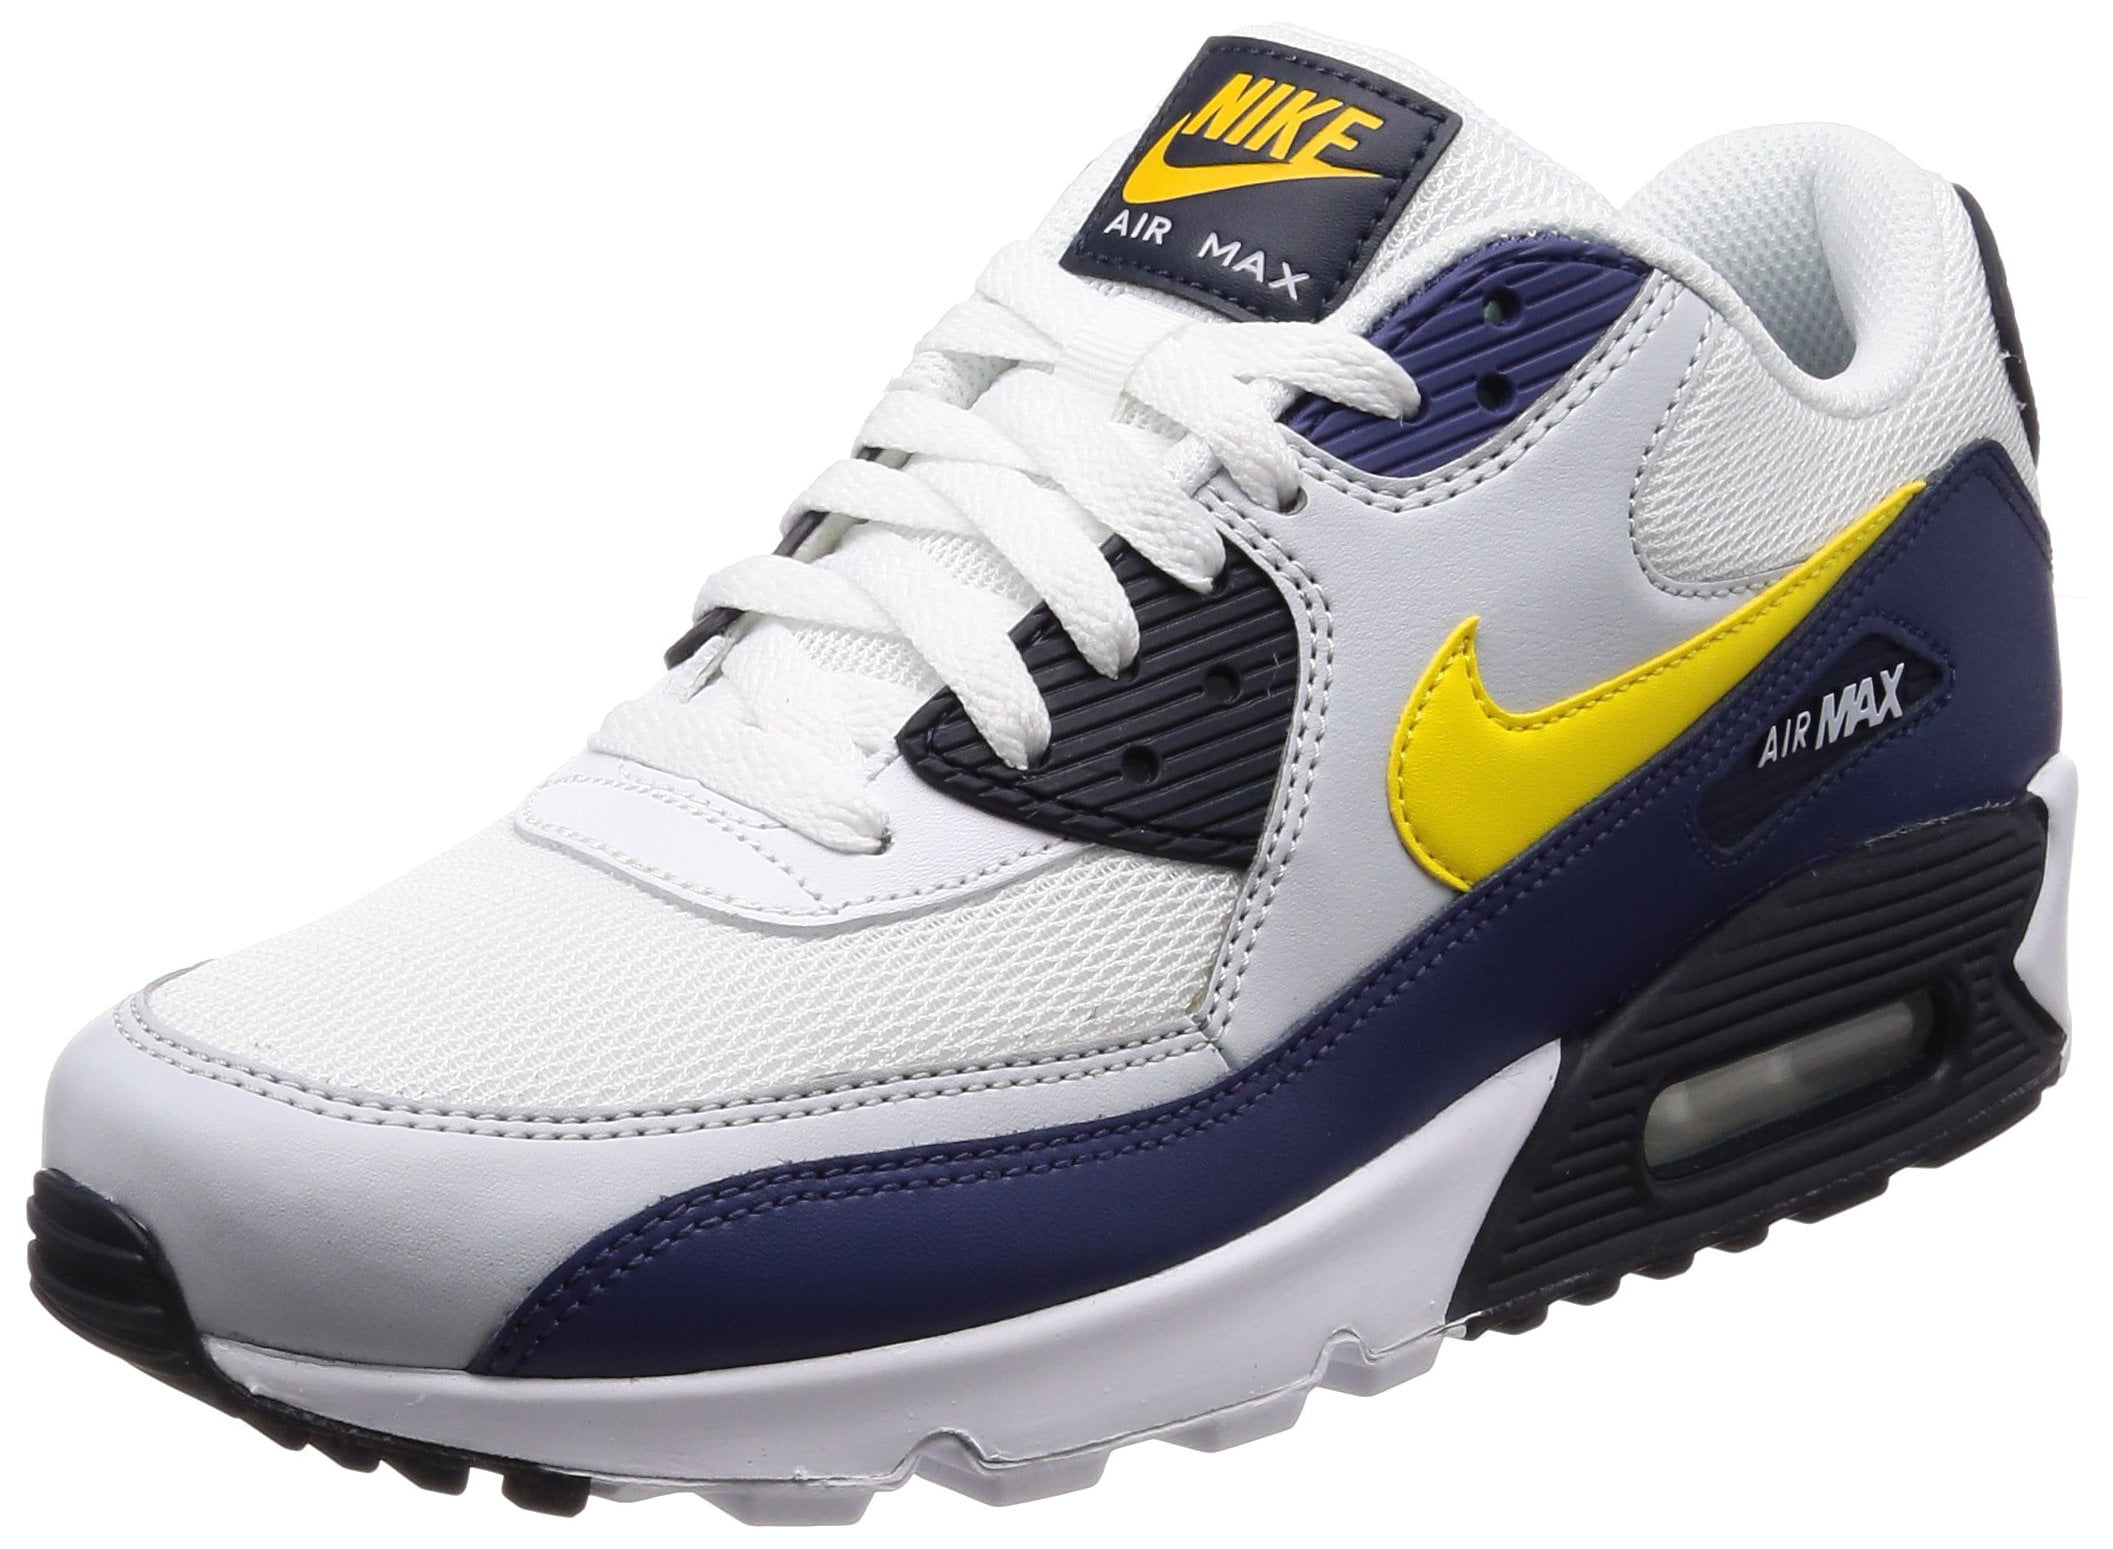 Pidgin Mainstream synd Nike AJ1285-101: Air Max 90 Essential Mens White/Blue/Platinum/Yellow  Sneakers - Walmart.com